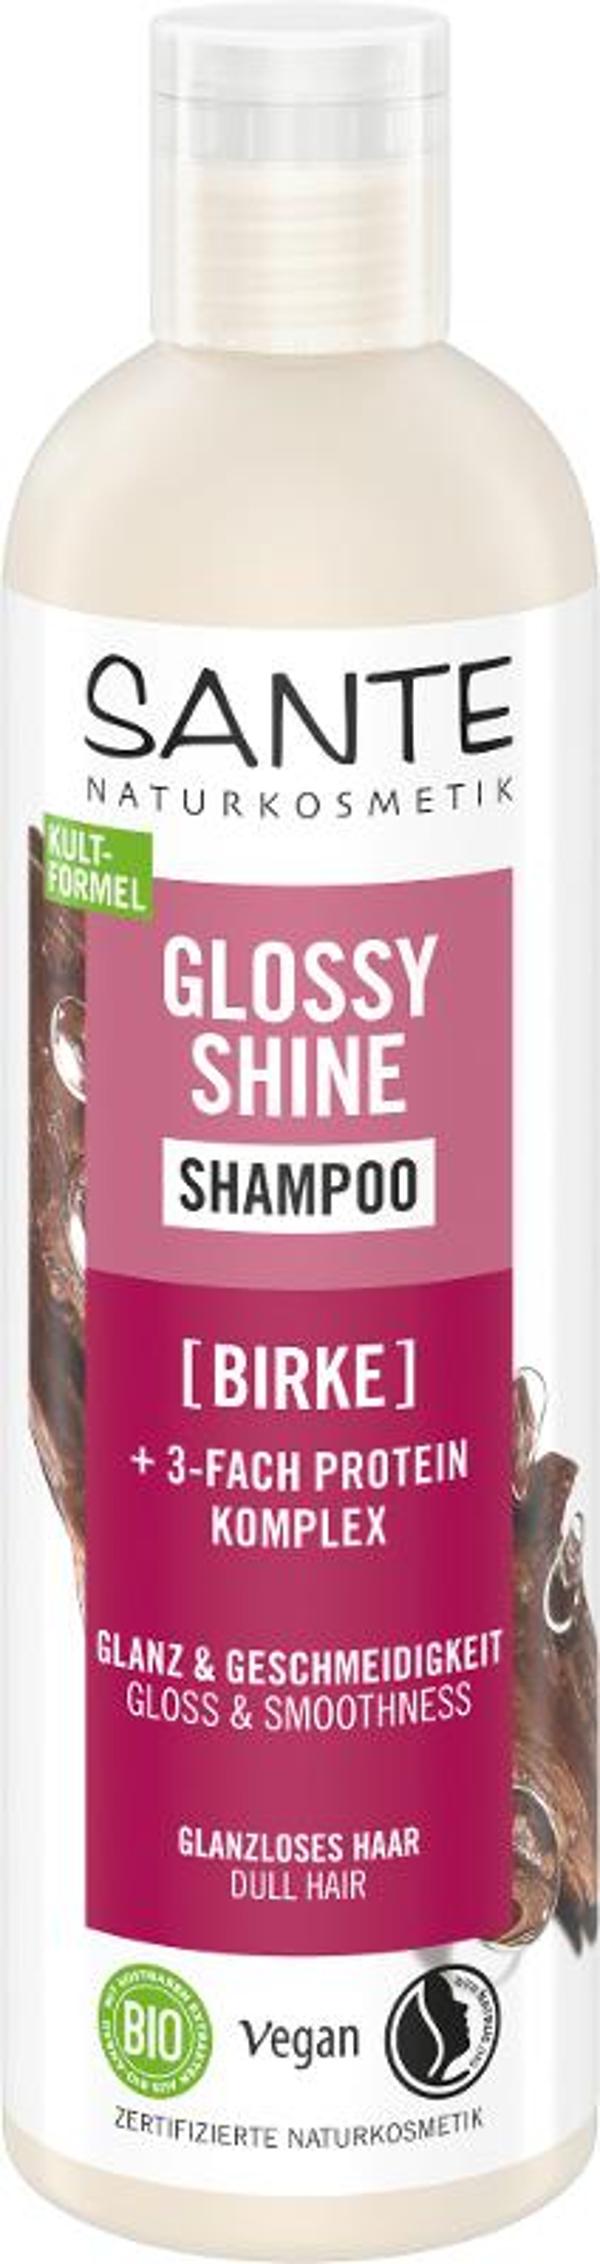 Produktfoto zu Glossy Shine Shampoo Birke 250ml